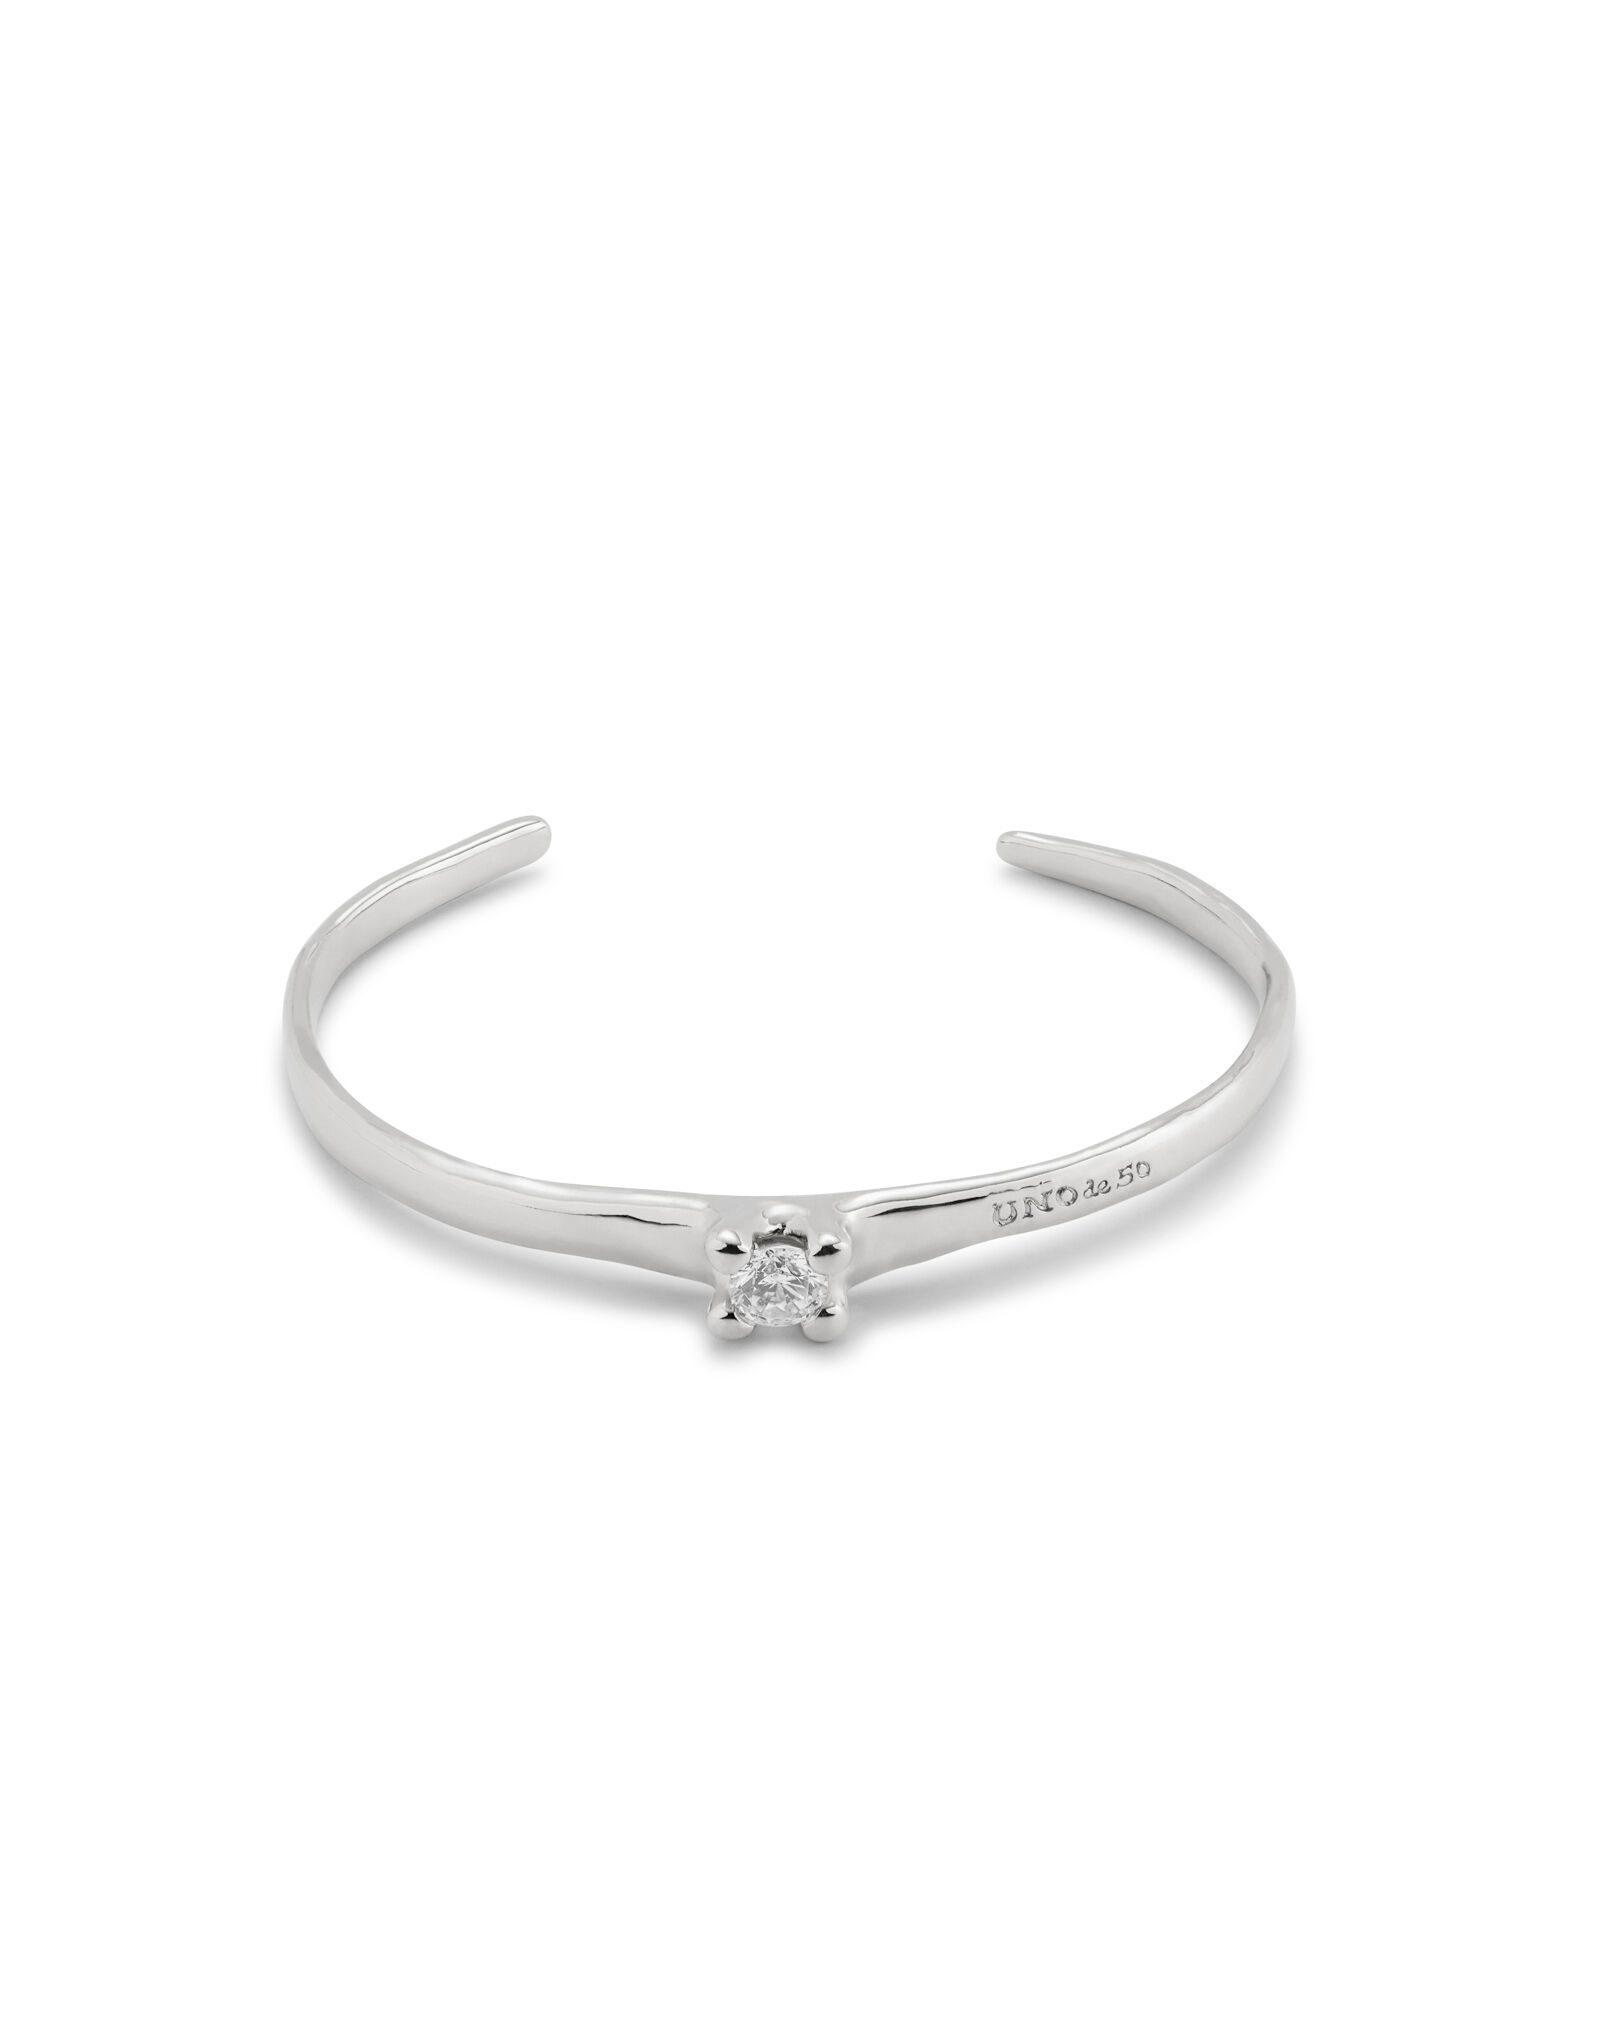 Pin by Bali Mangat on jewellery | Silver bracelet designs, Gold jewelry  fashion, Jewelry bracelets silver